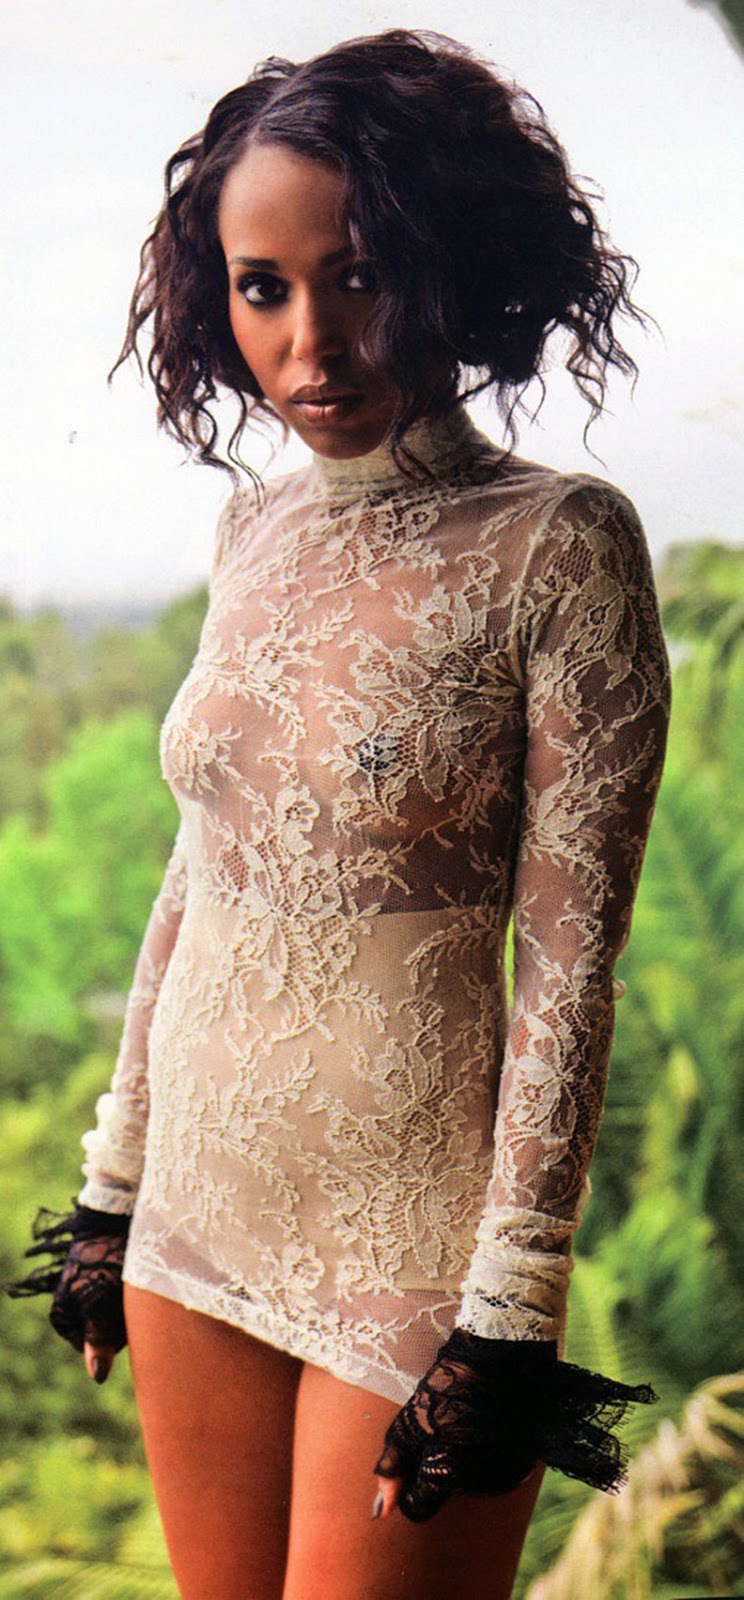 Kerry Washington Nude Photos